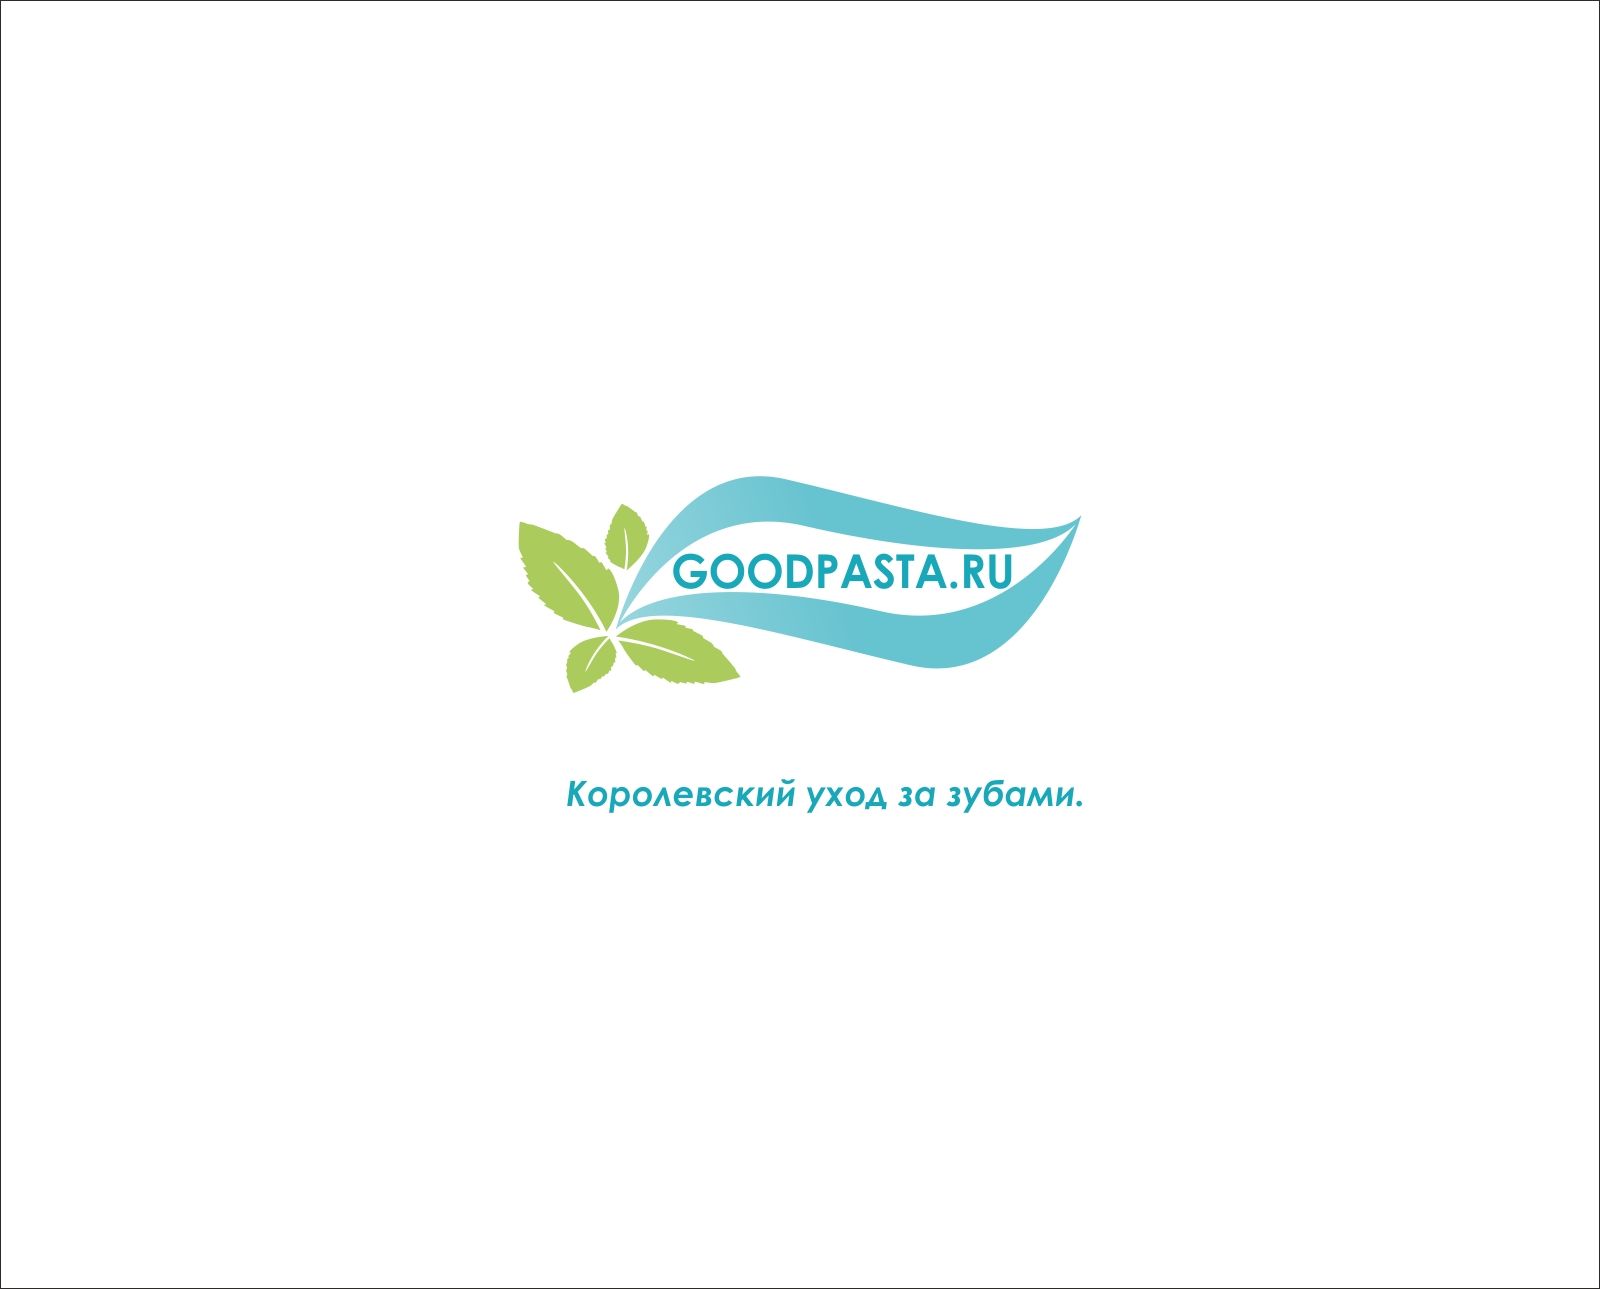 Логотип для интернет-магазина goodpasta.ru - дизайнер froogg